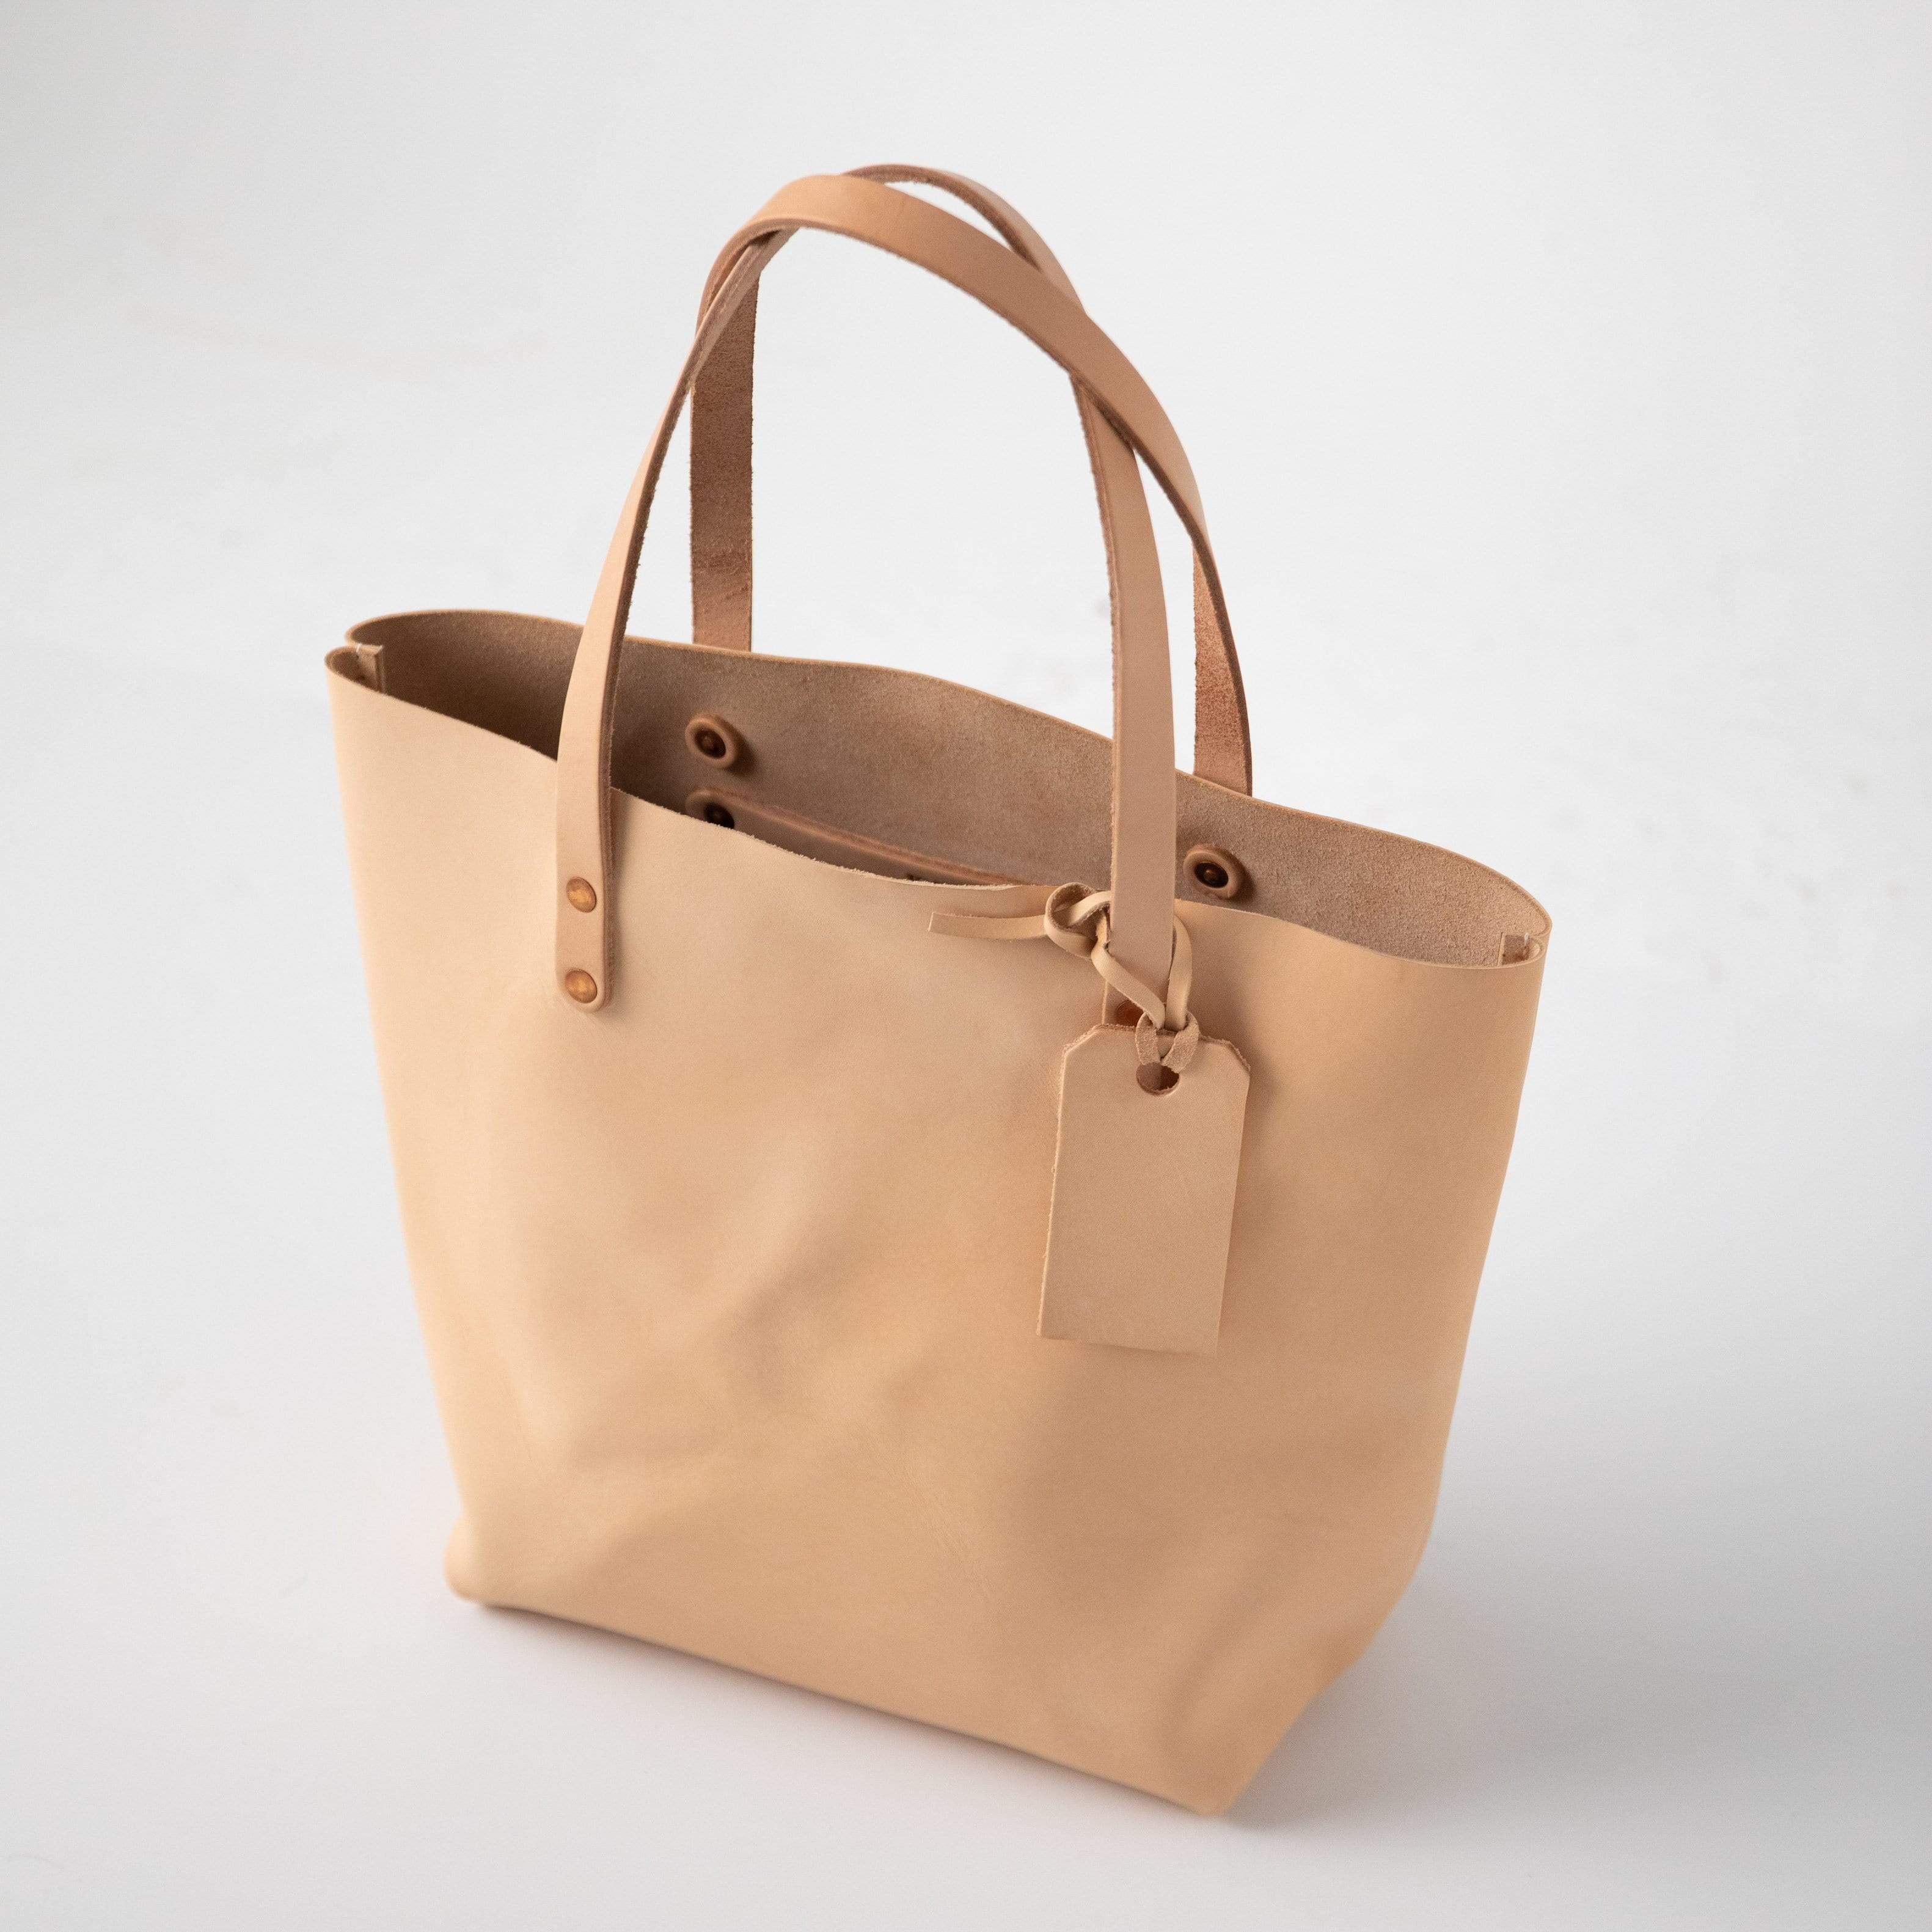 The Tote Bag For Women, Trendy PU Leather Handbag, Top Handle Satchel Purse,  Casual Crossbody Bag,Rose Red - Walmart.com